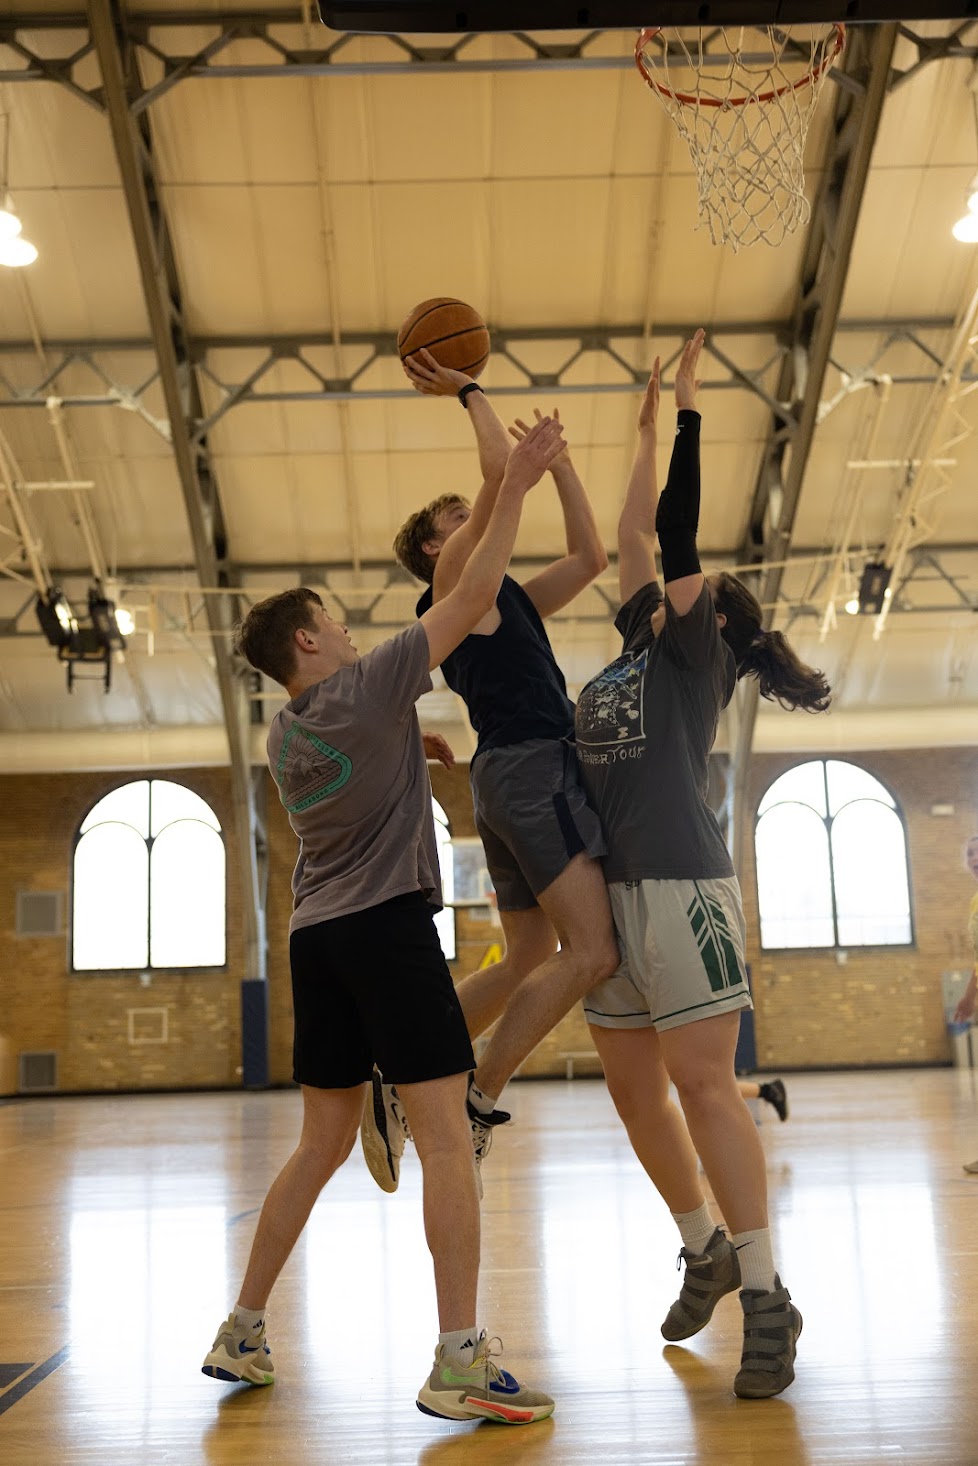 Gender and pickup basketball at UMICH